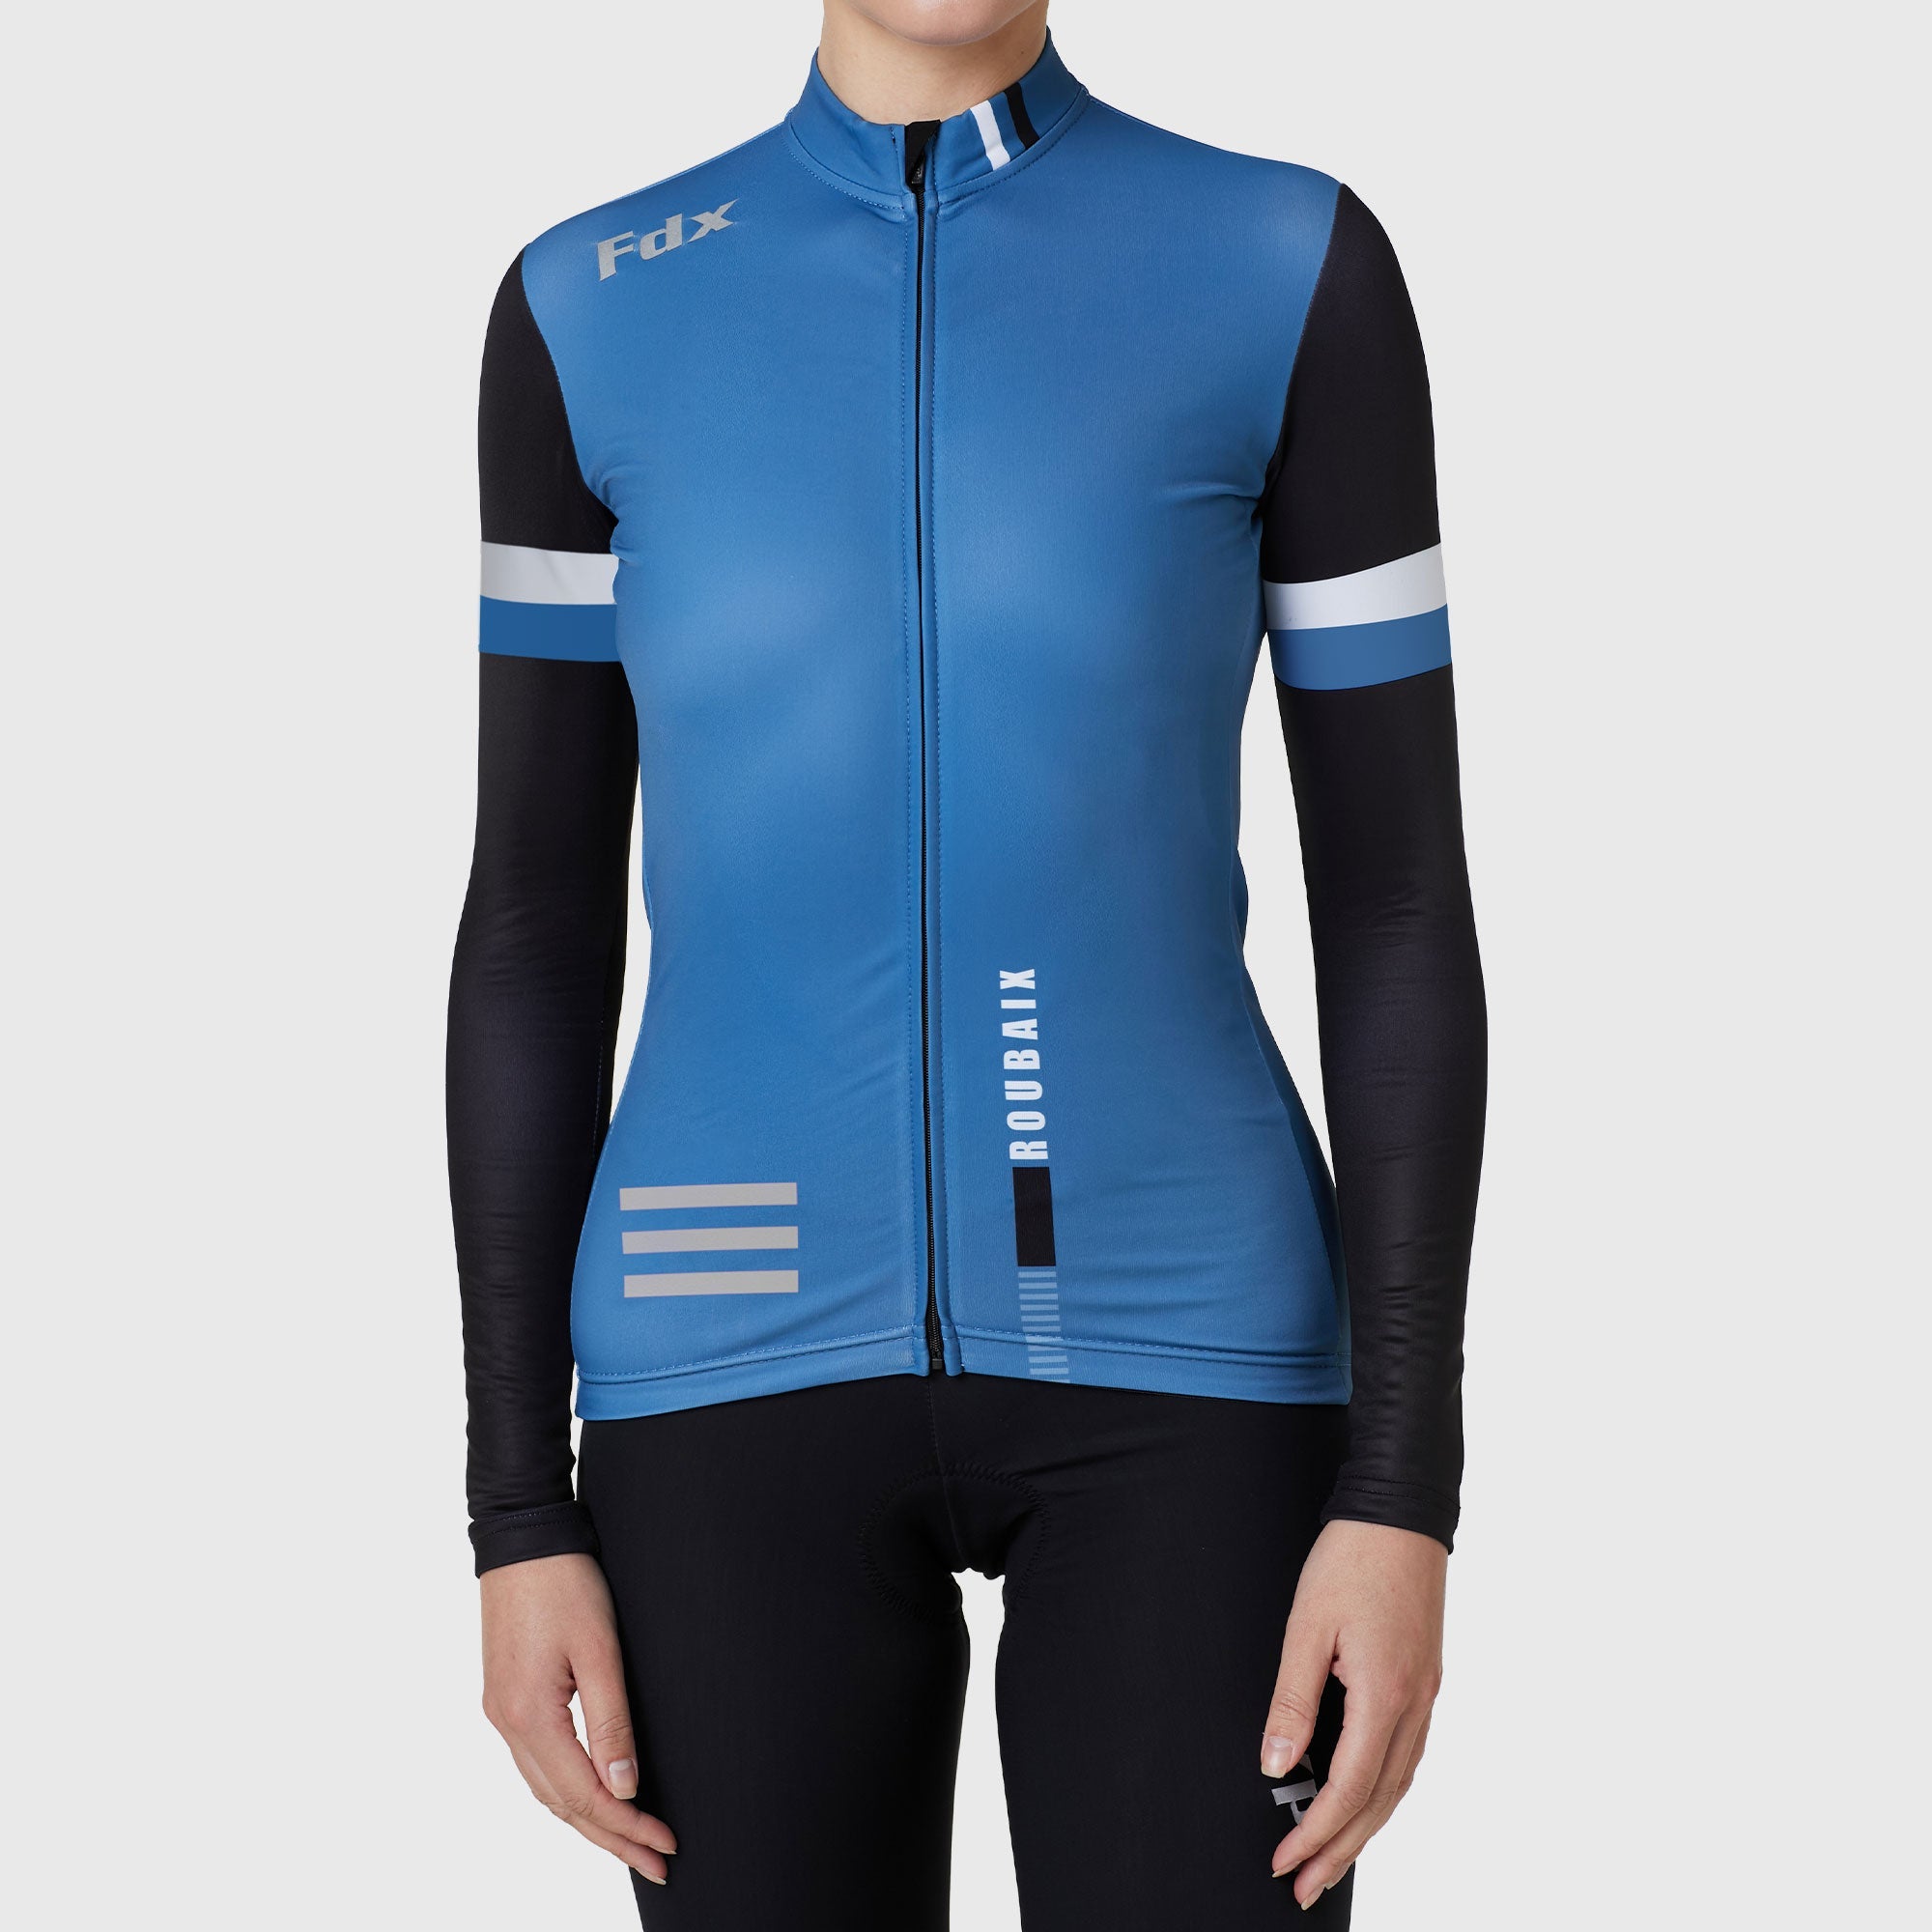 Fdx Best Women's Black & Blue Long Sleeve Cycling Jersey for Winter Roubaix Thermal Fleece Shirt Road Bike Wear Top Full Zipper, Lightweight  Pockets & Hi viz Reflectors - Limited Edition